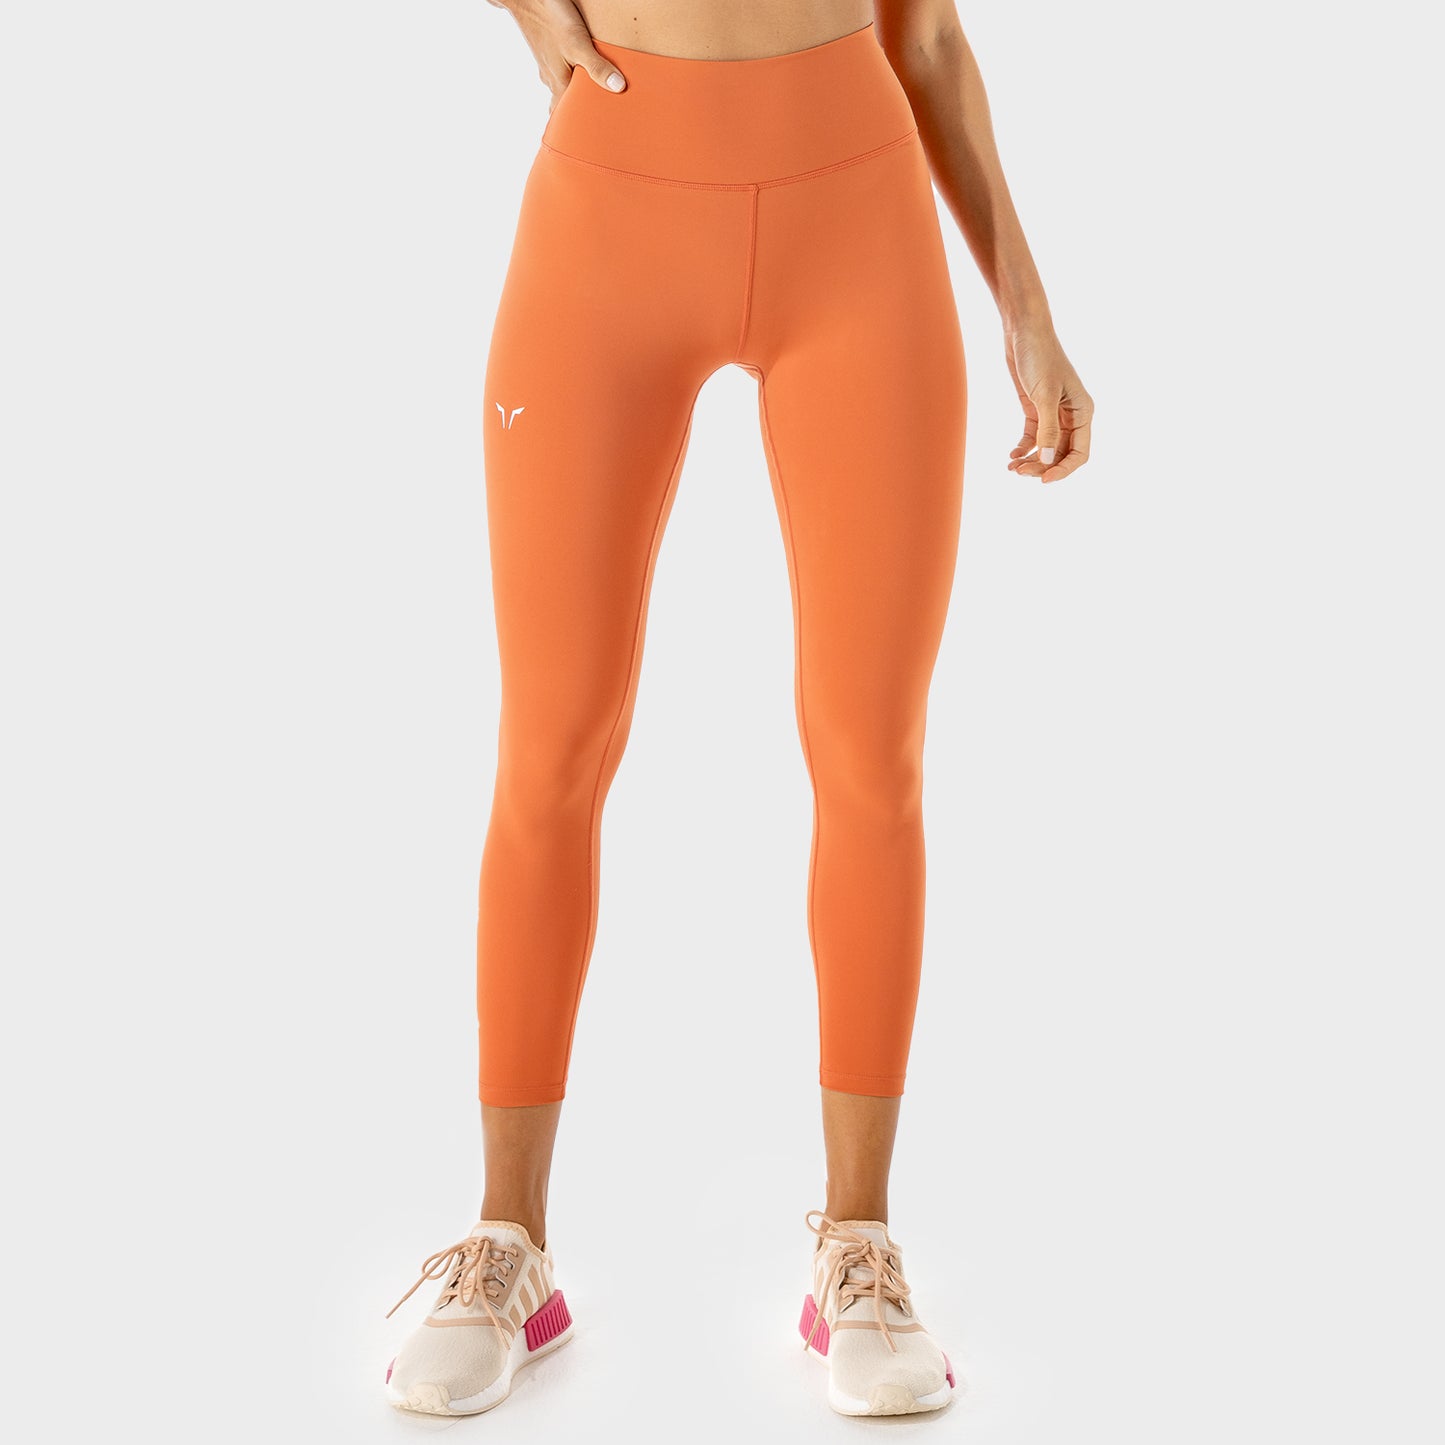 squatwolf-workout-clothes-womens-fitness-7-8-leggings-orange-gym-leggings-for-women